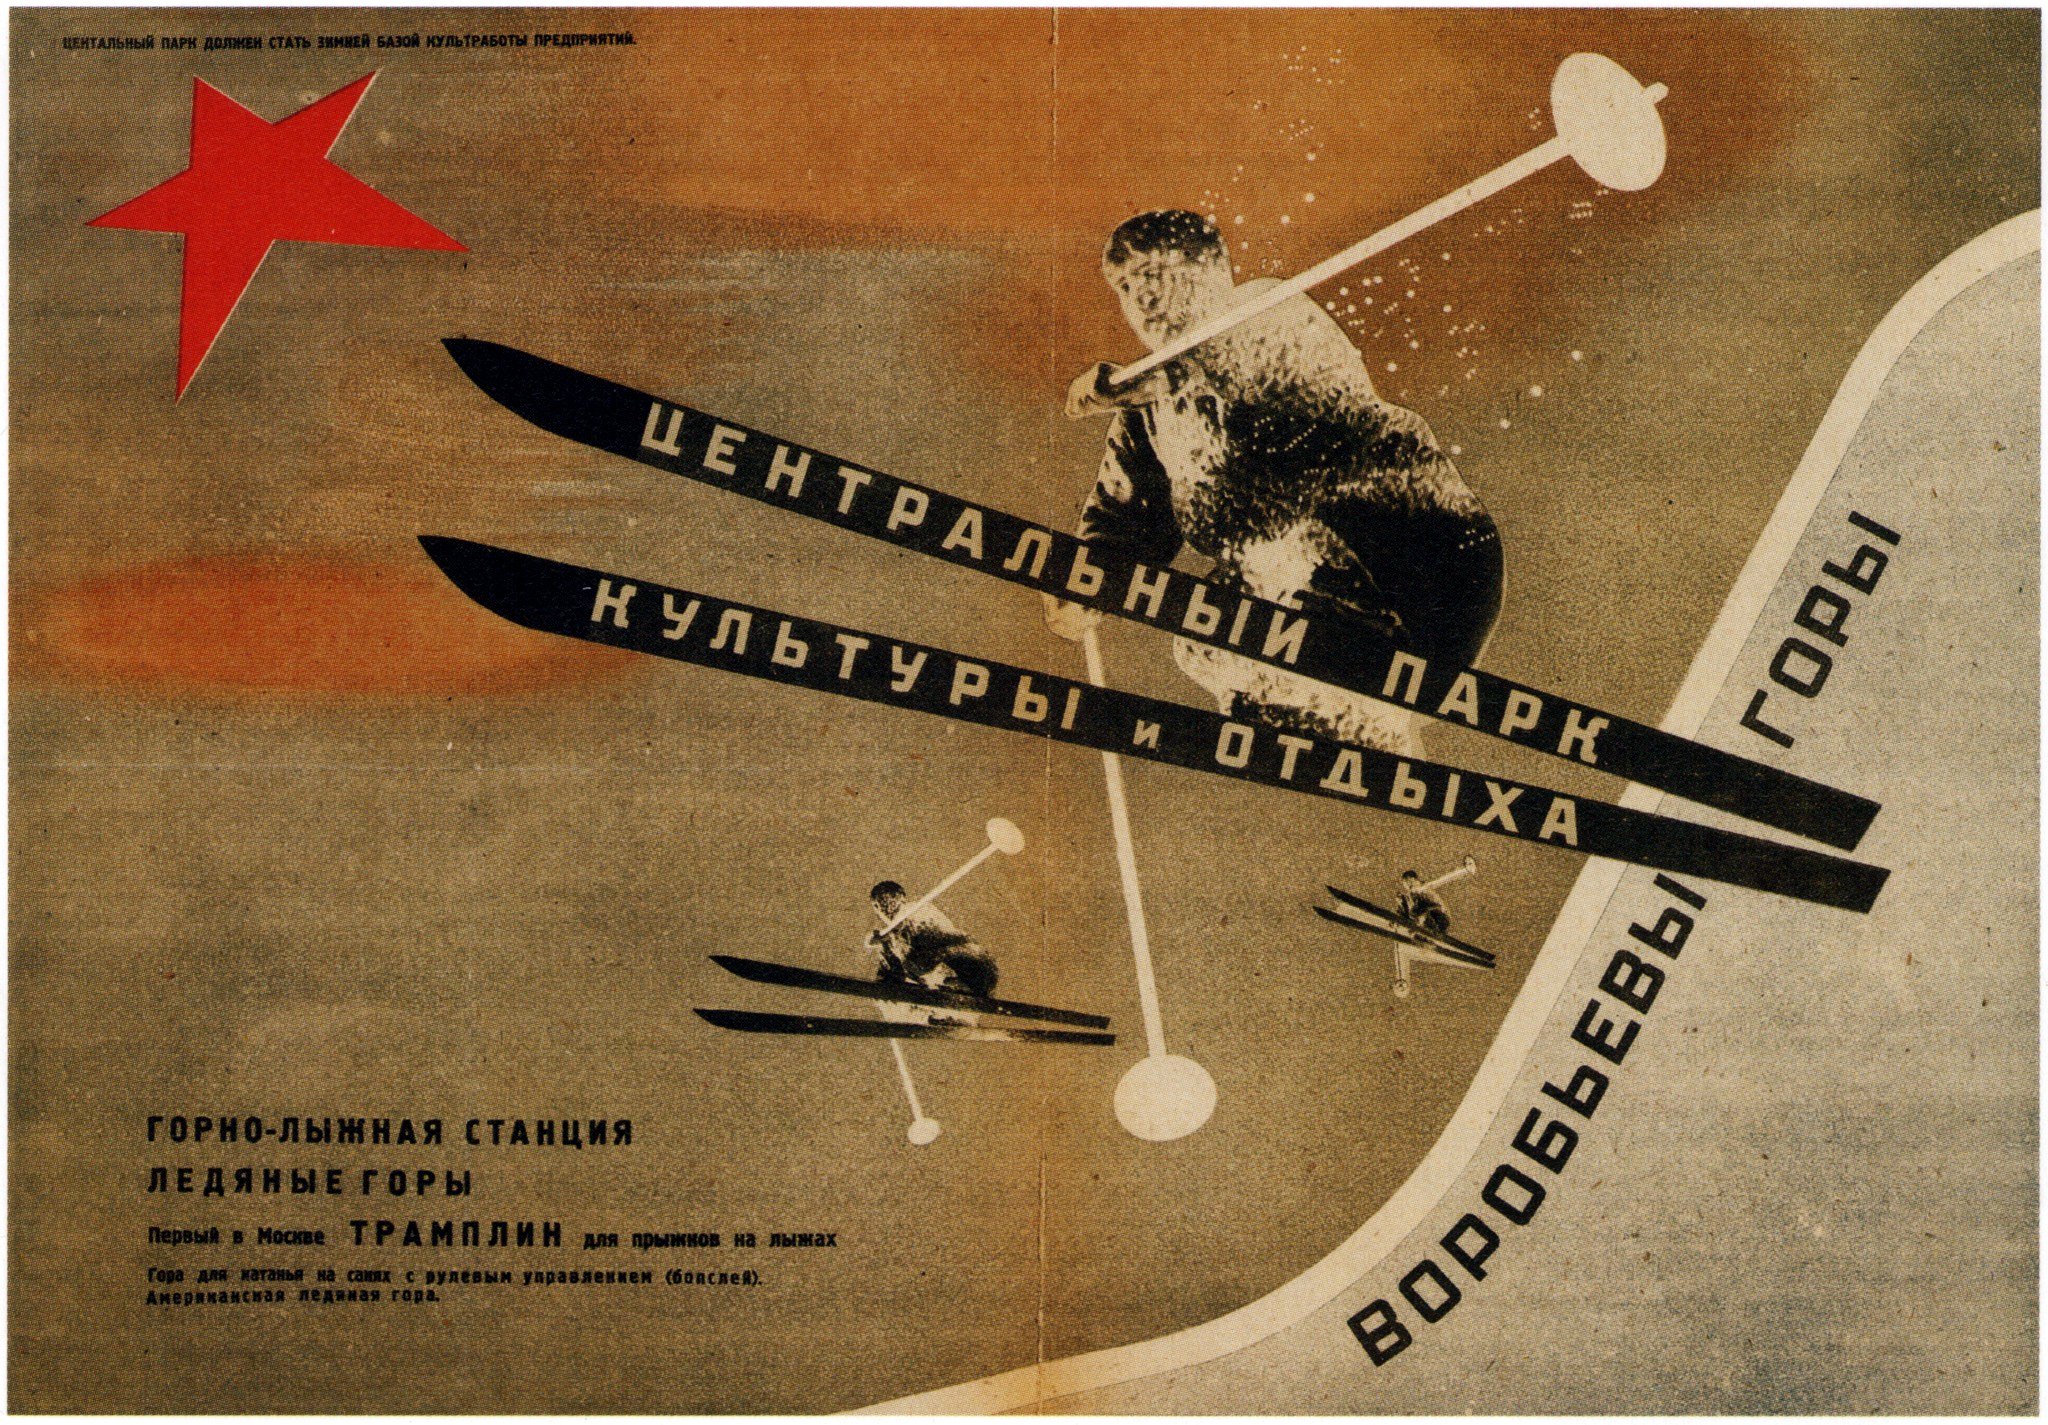 高爾基中央文化公園 by El Lissitzky - 1931 - - 